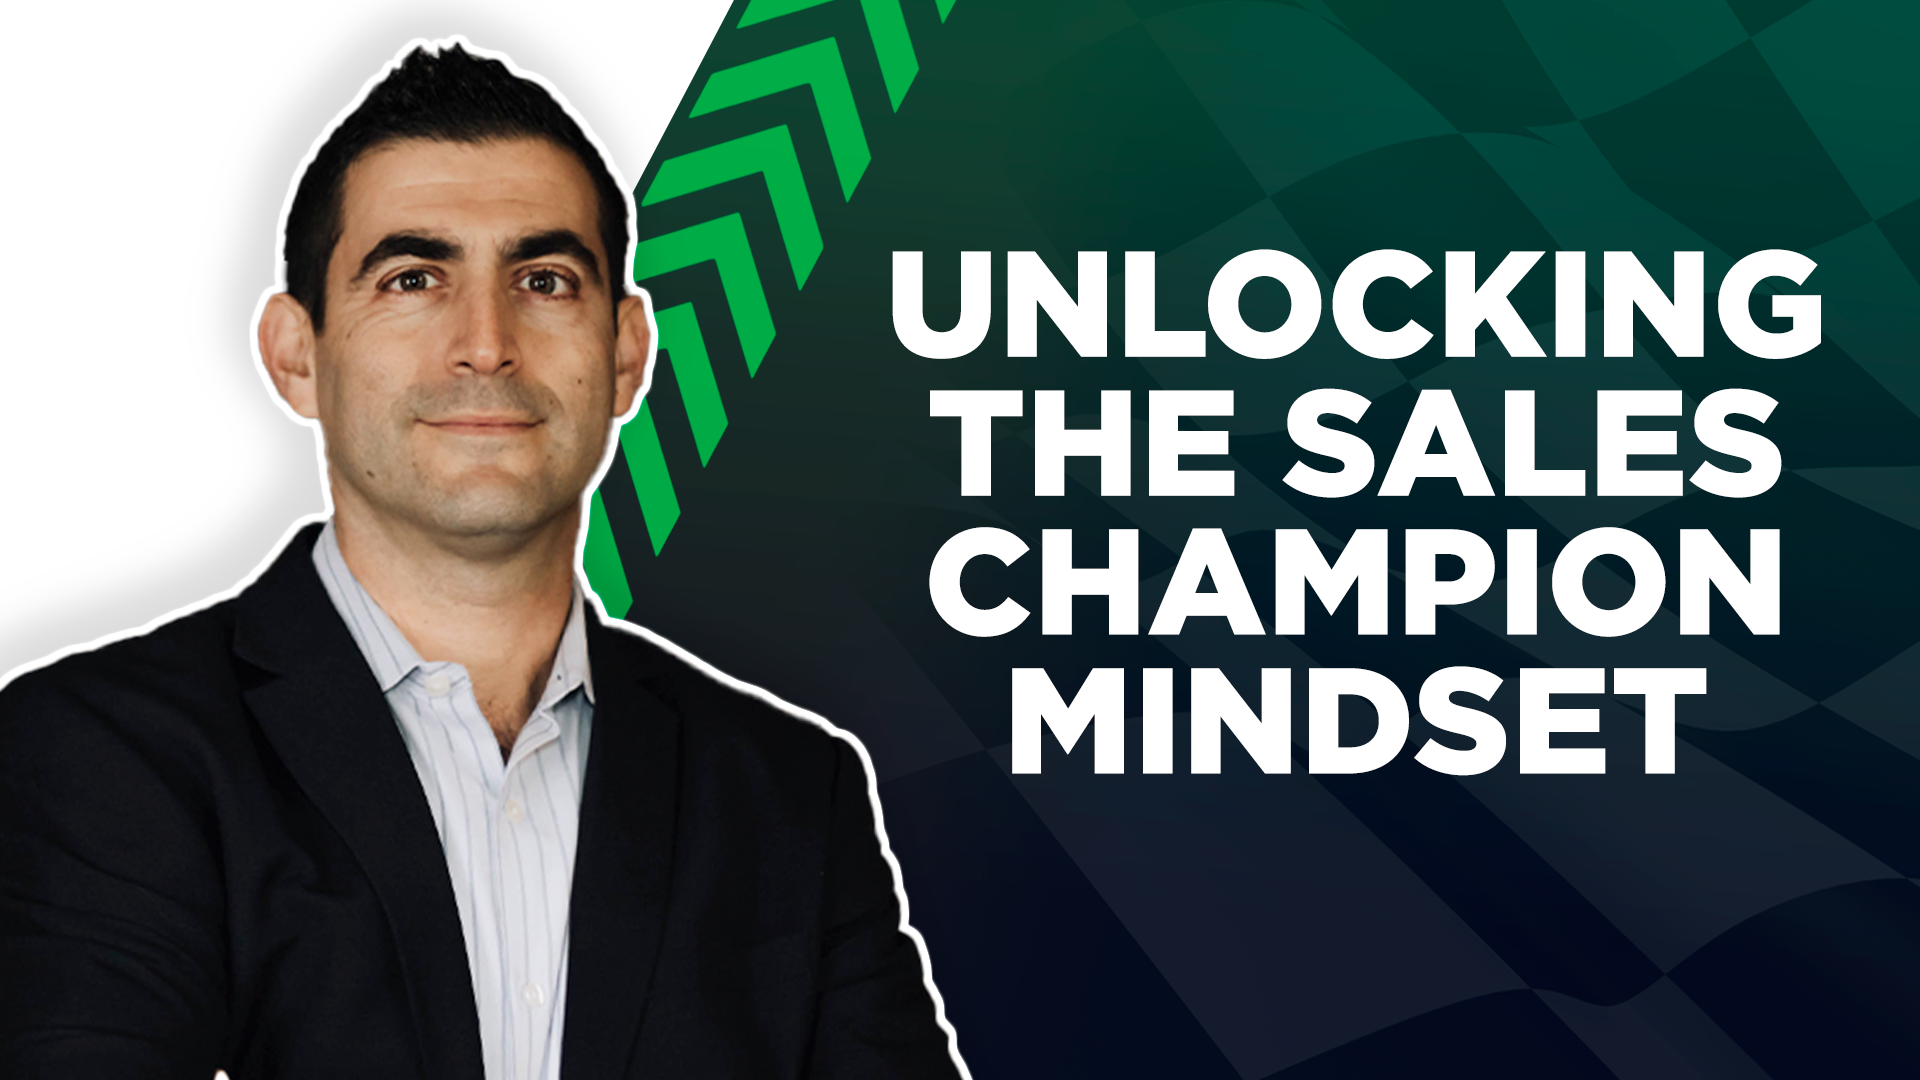 Podcast Pit Stop: Ian Koniak on Unlocking The Sales Champion Mindset